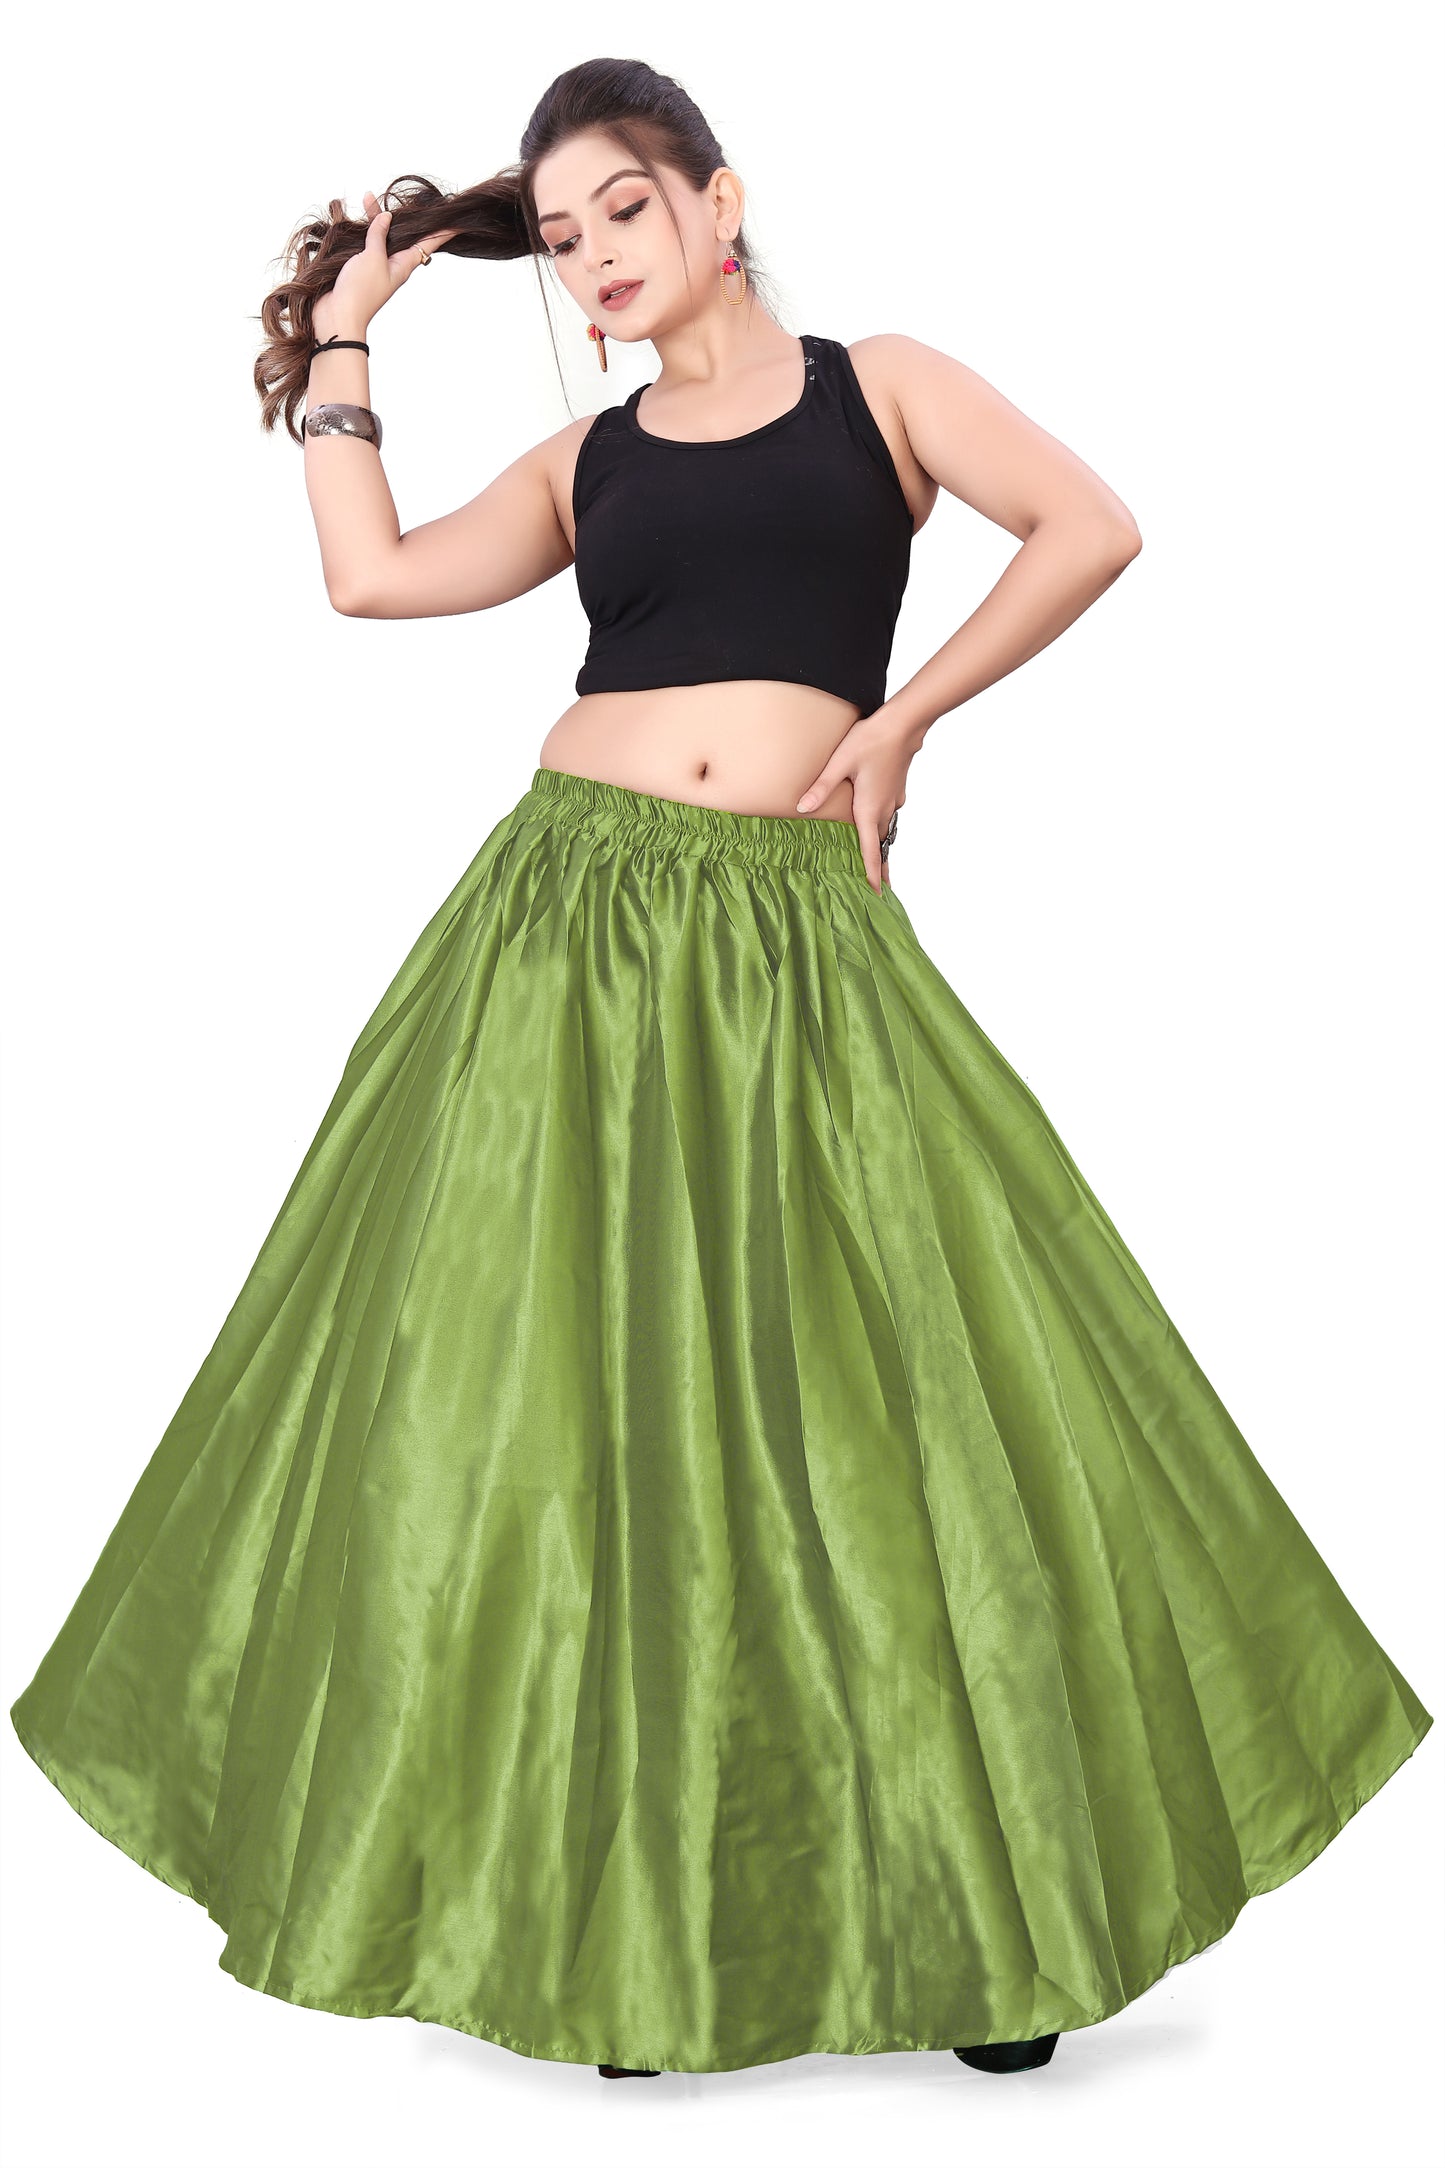 Satin Belly Dance Half Circle Skirt S9-Regular Size 2